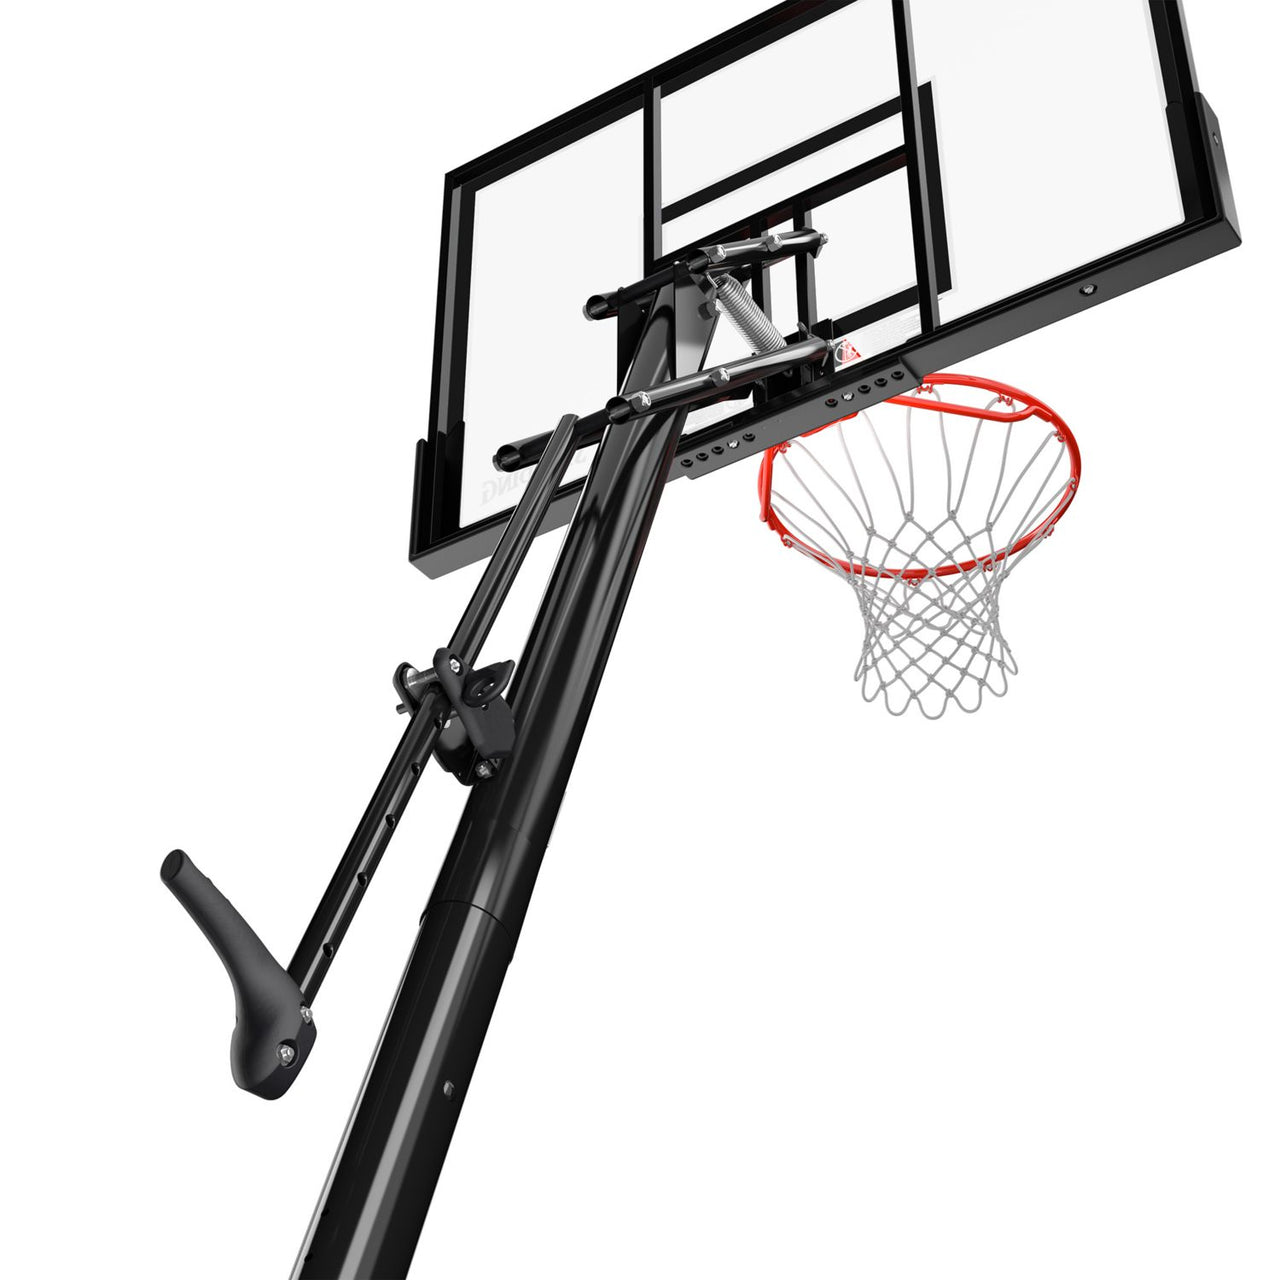 Spalding 50" Performance Acrylic Exactaheight Portable Basketball Hoop